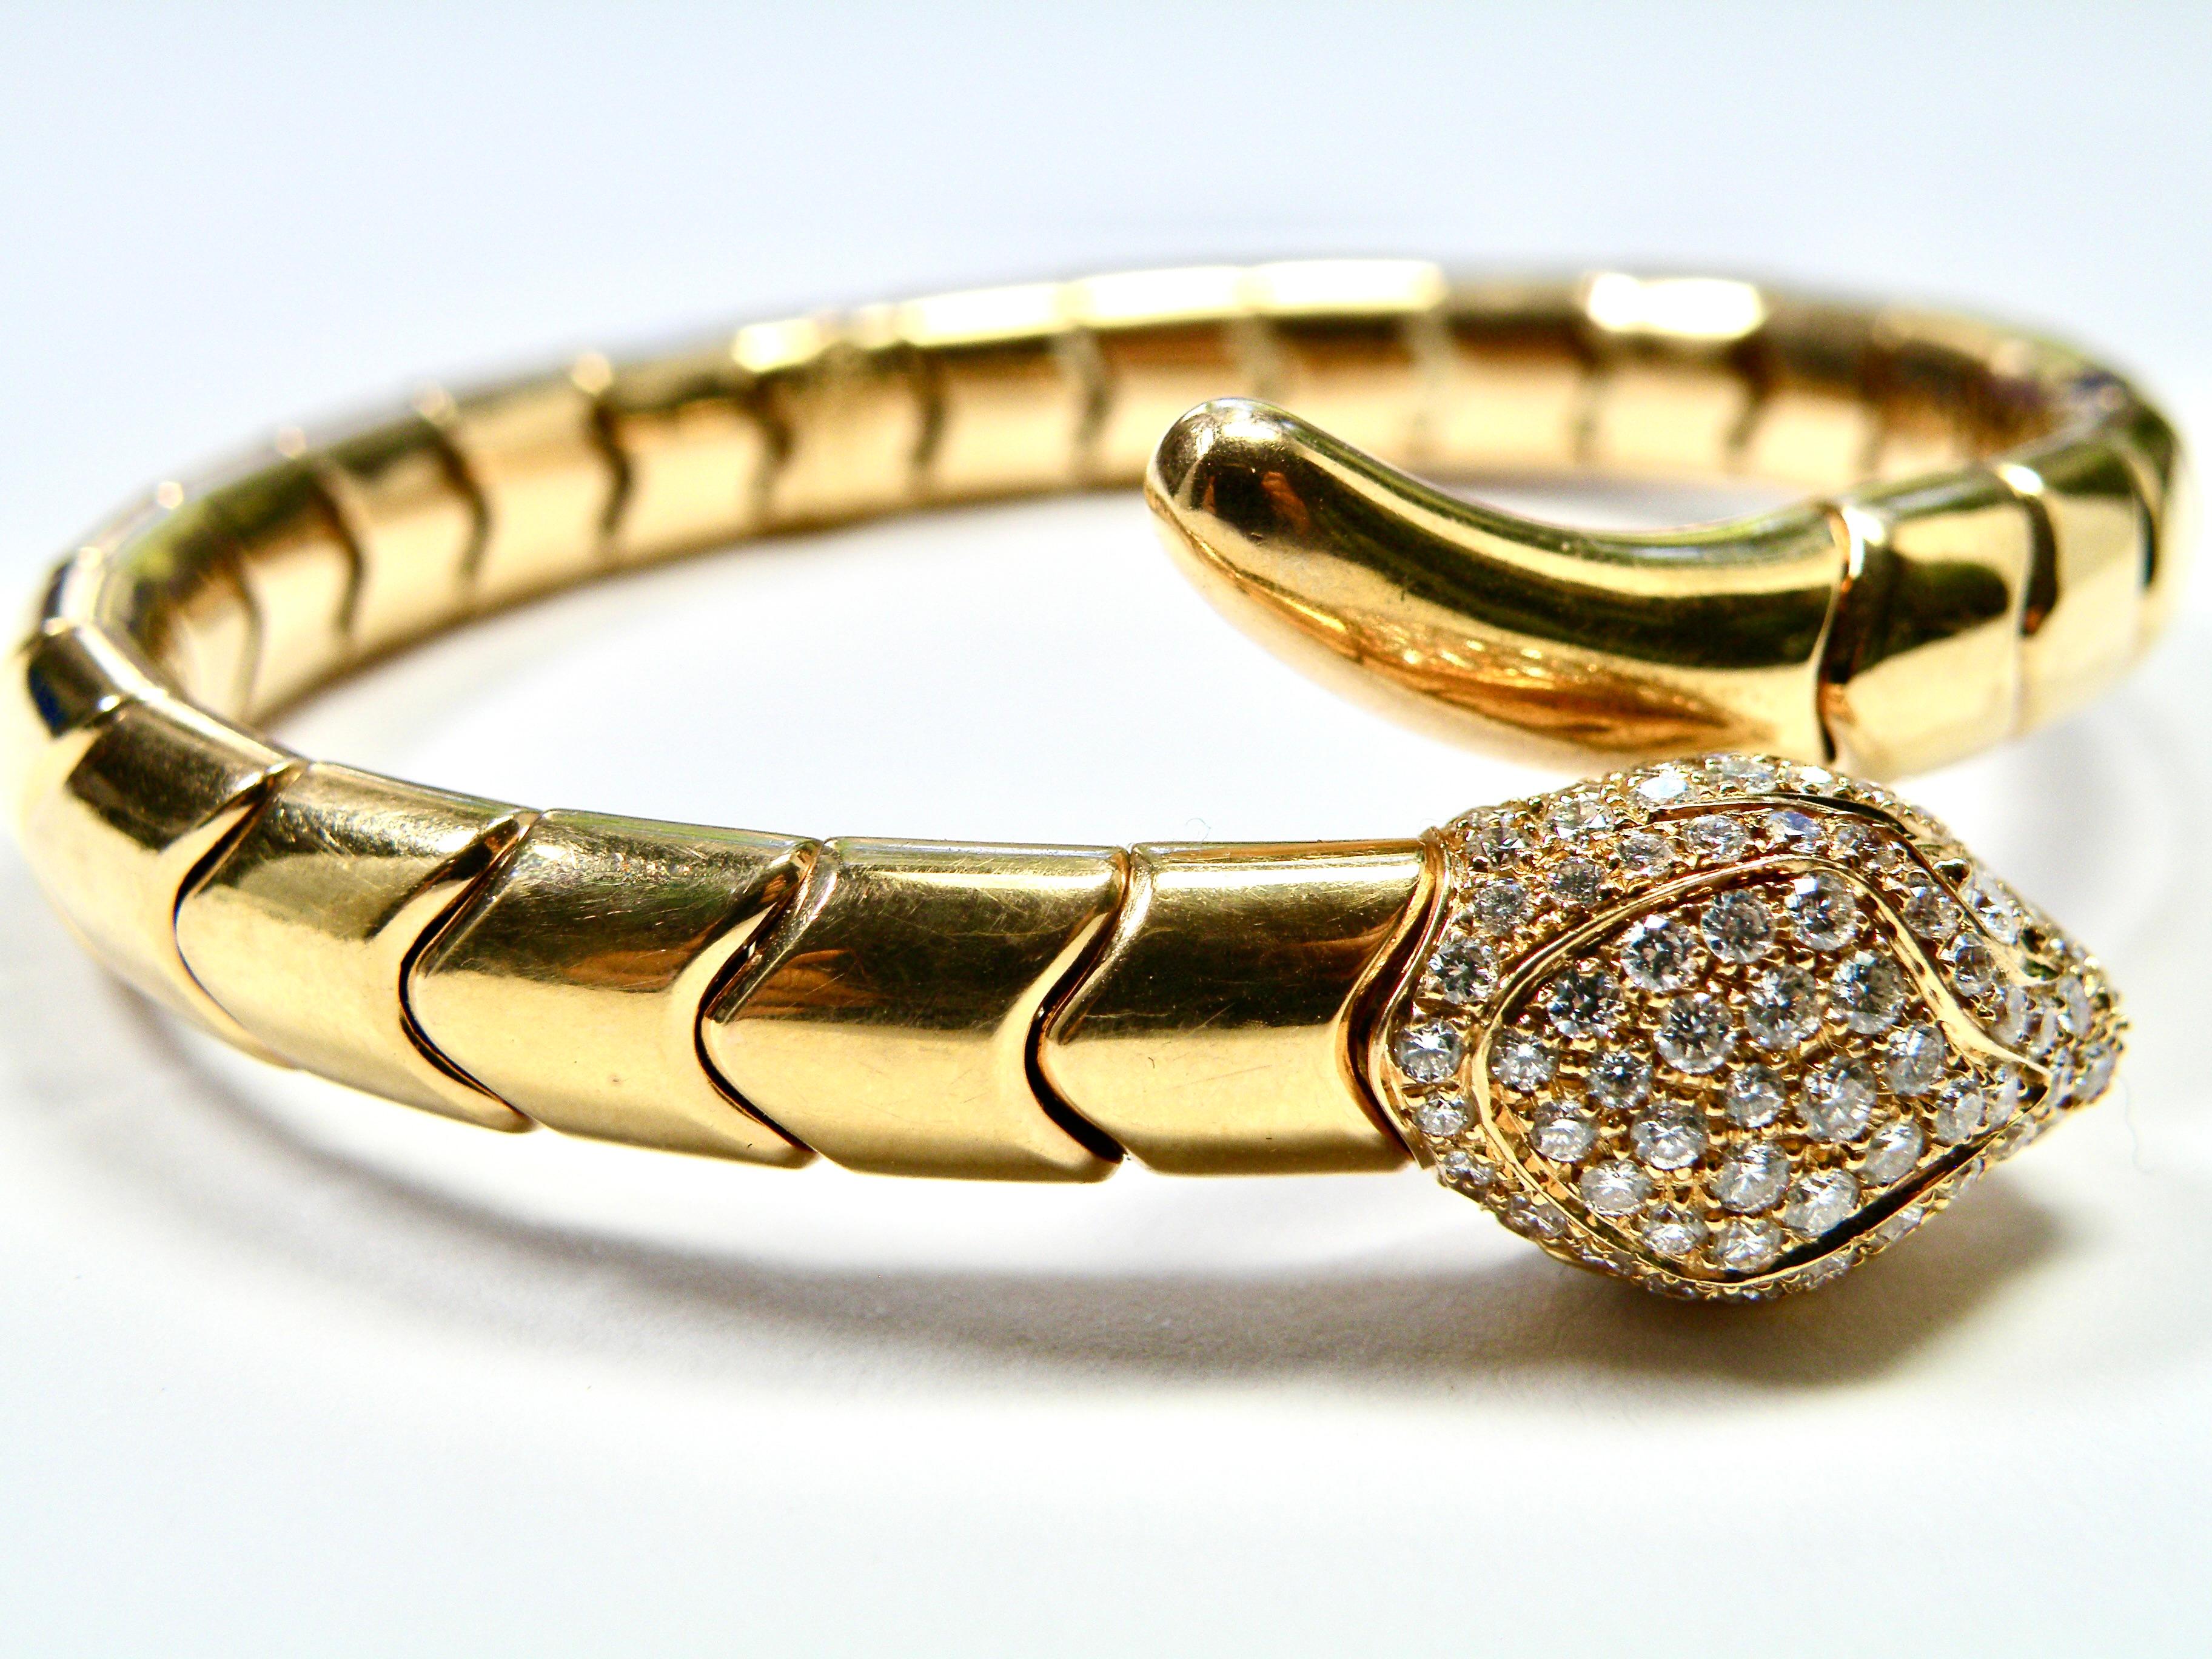 18k snake bracelet with Pave set diamond head by Leo Pizzo For Sale 2